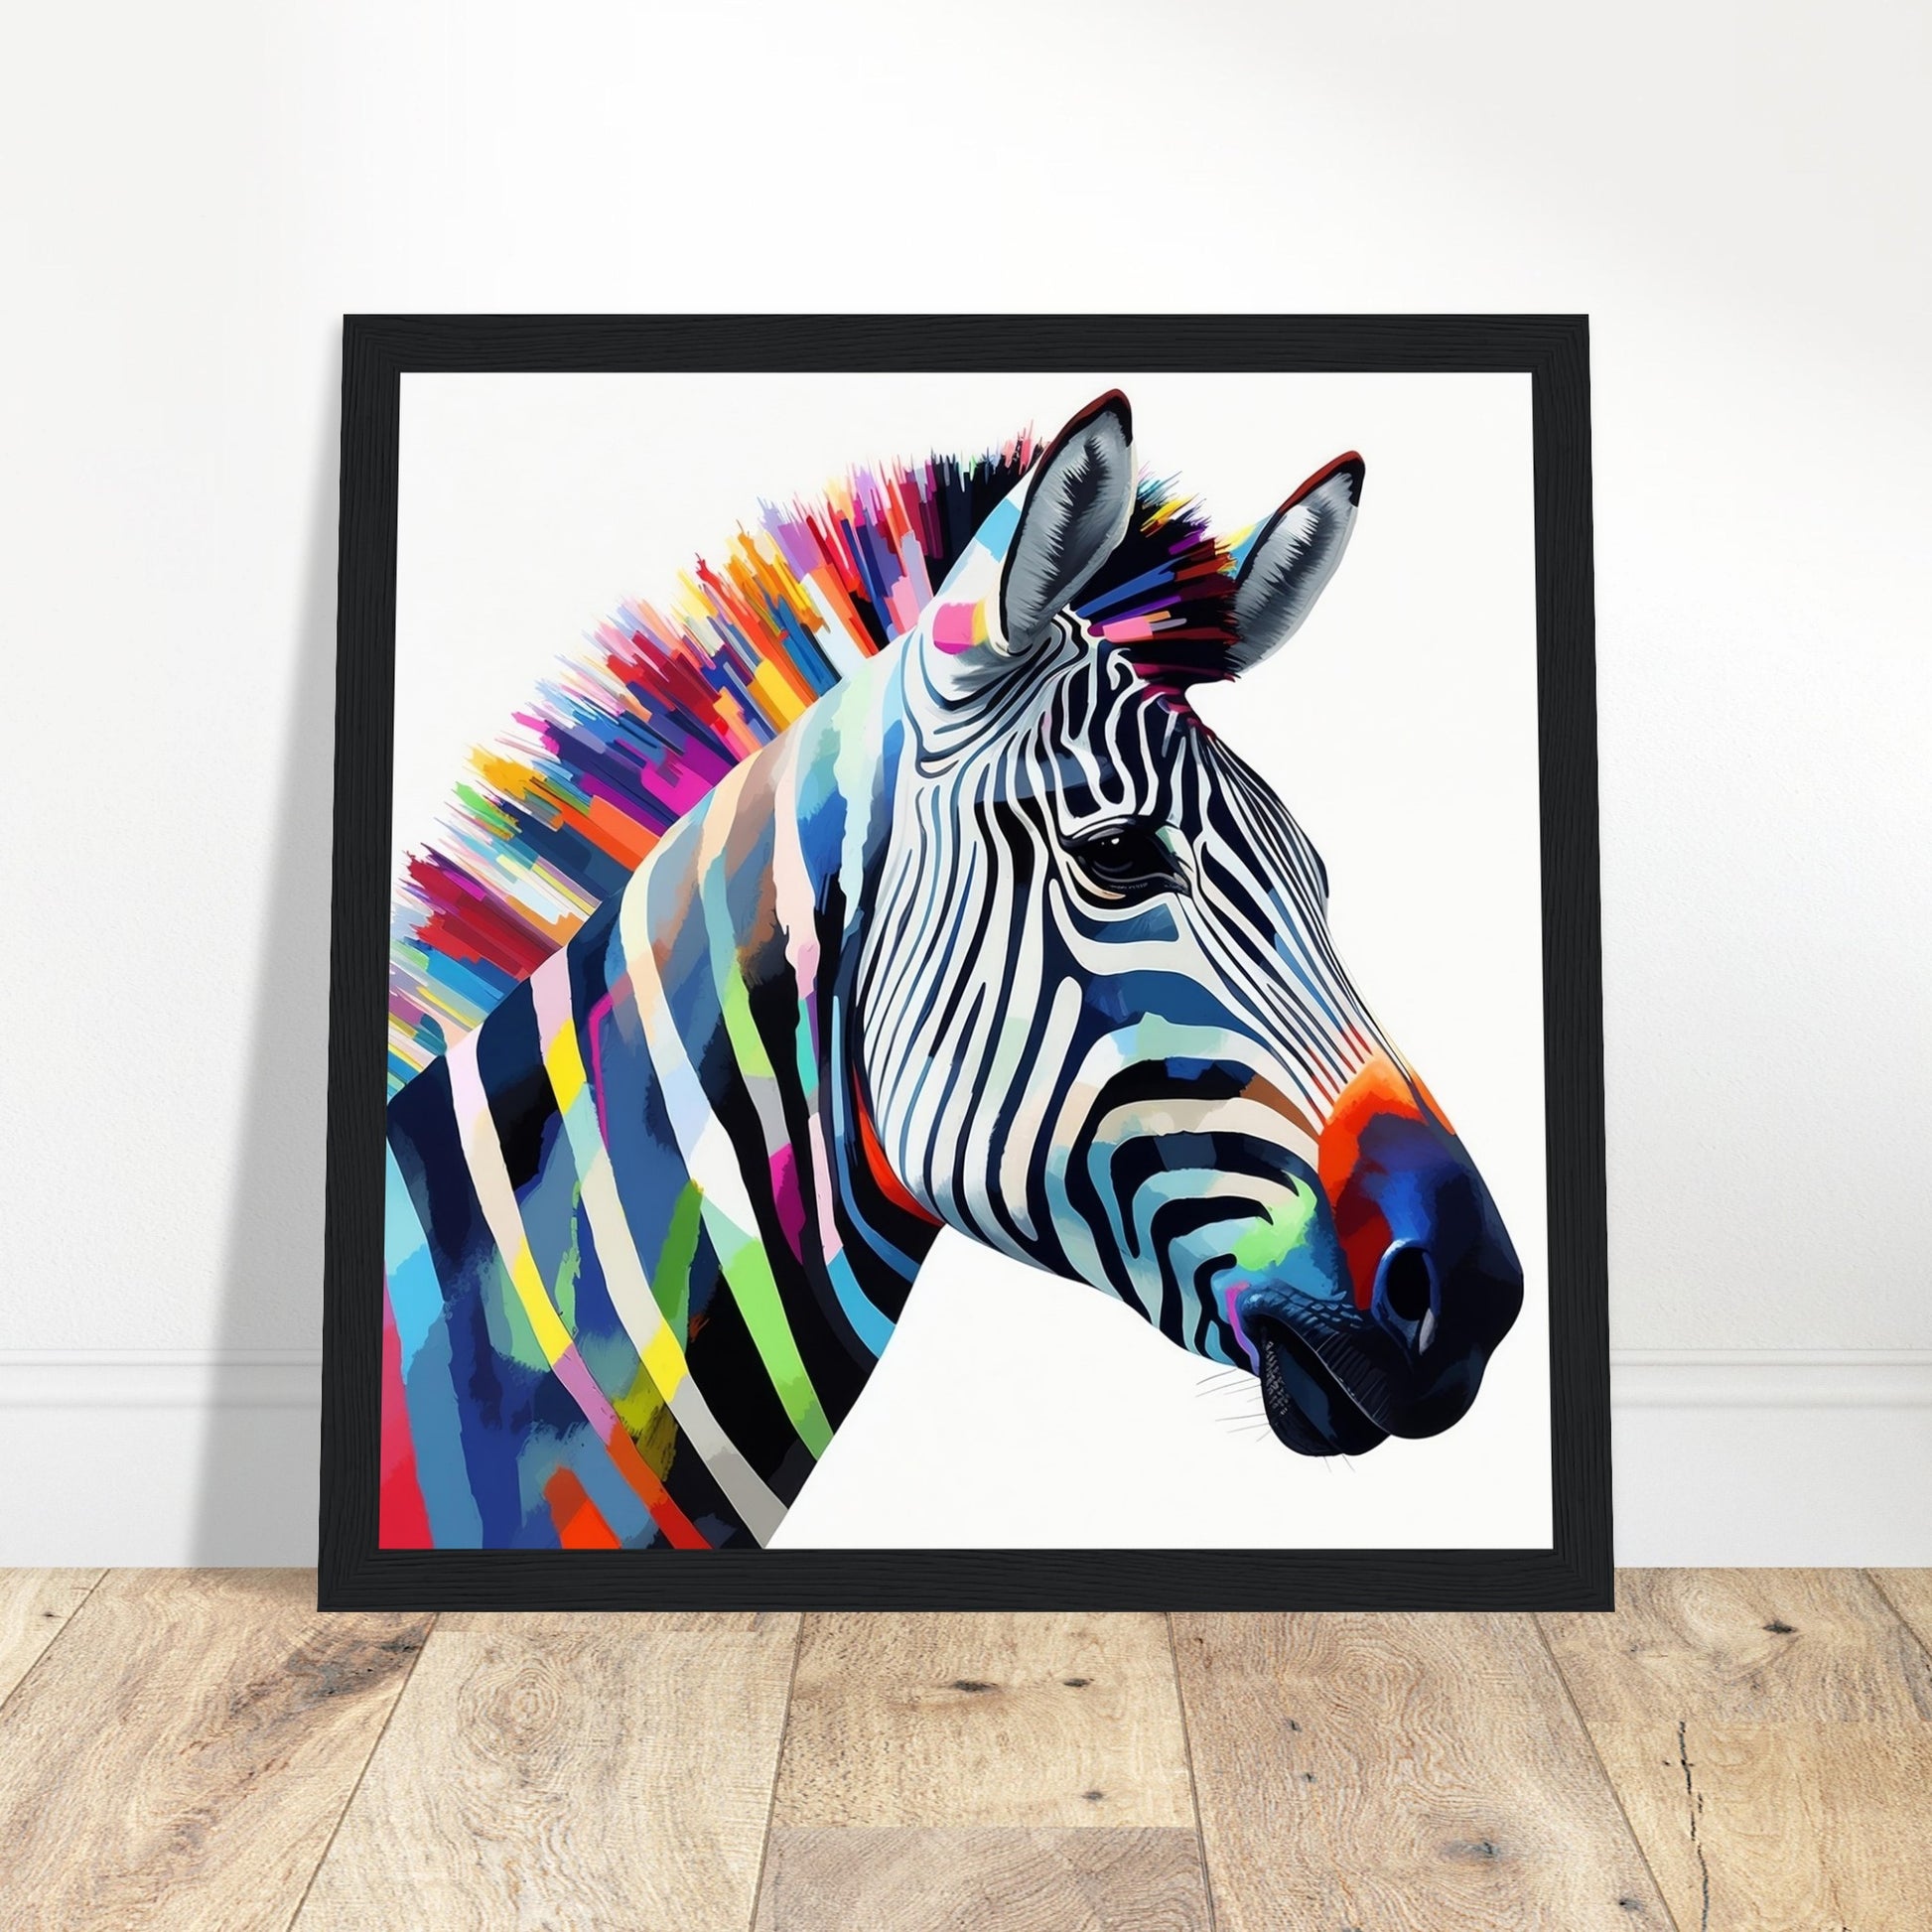 Colourful Zebra Artwork - Print Room Ltd Dark wood frame 30x30 cm / 12x12"